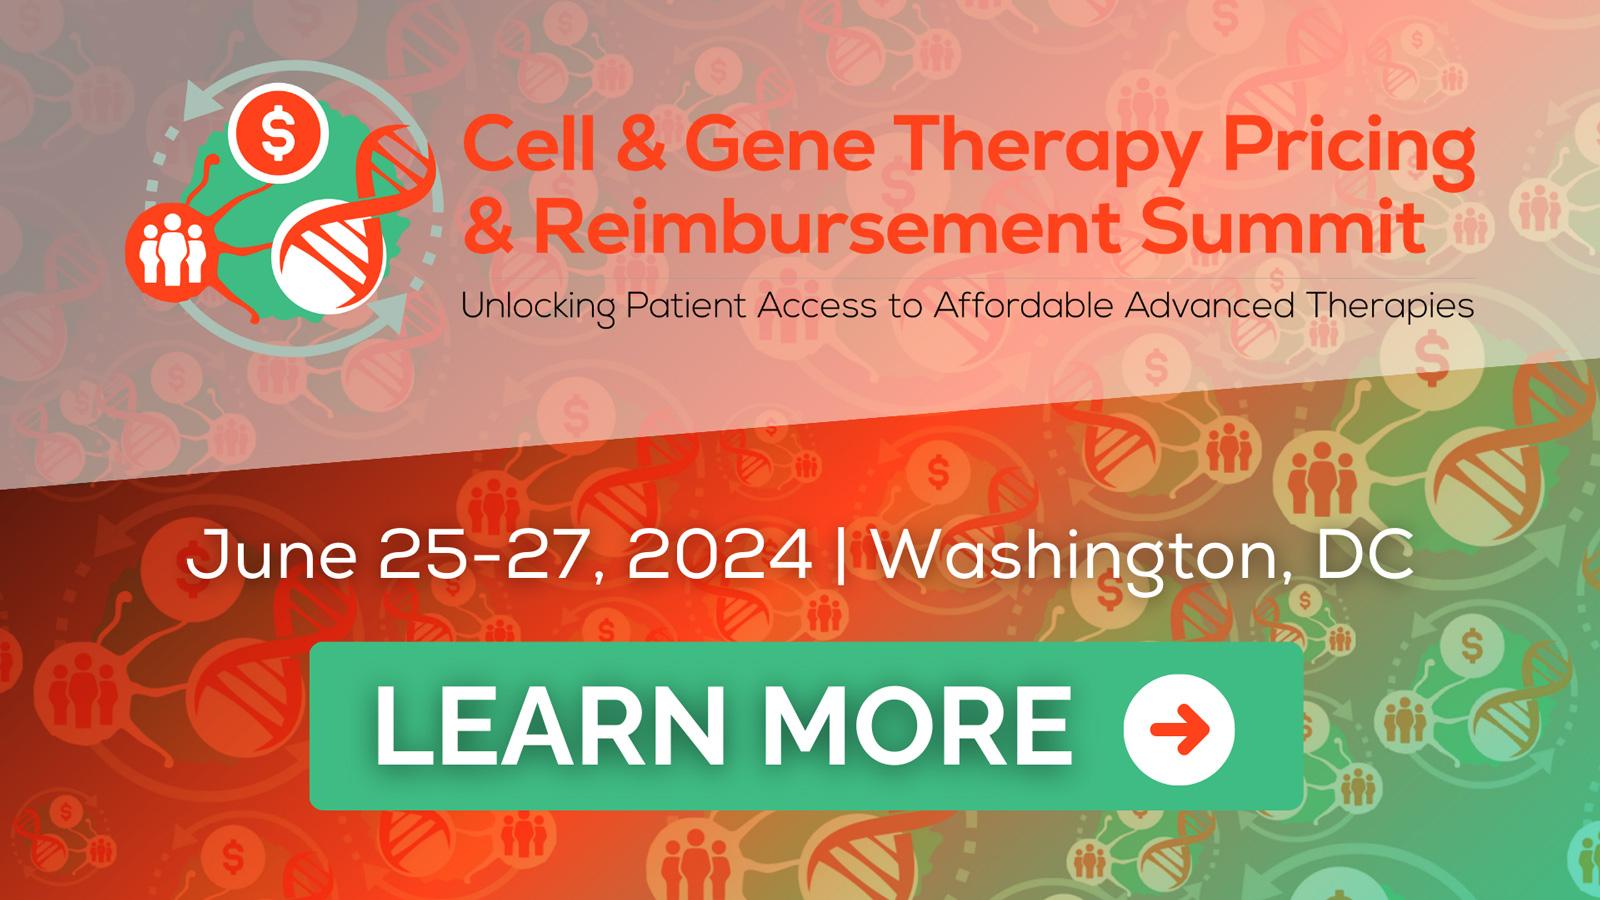 Cell & Gene Therapy Pricing & Reimbursement Summit banner